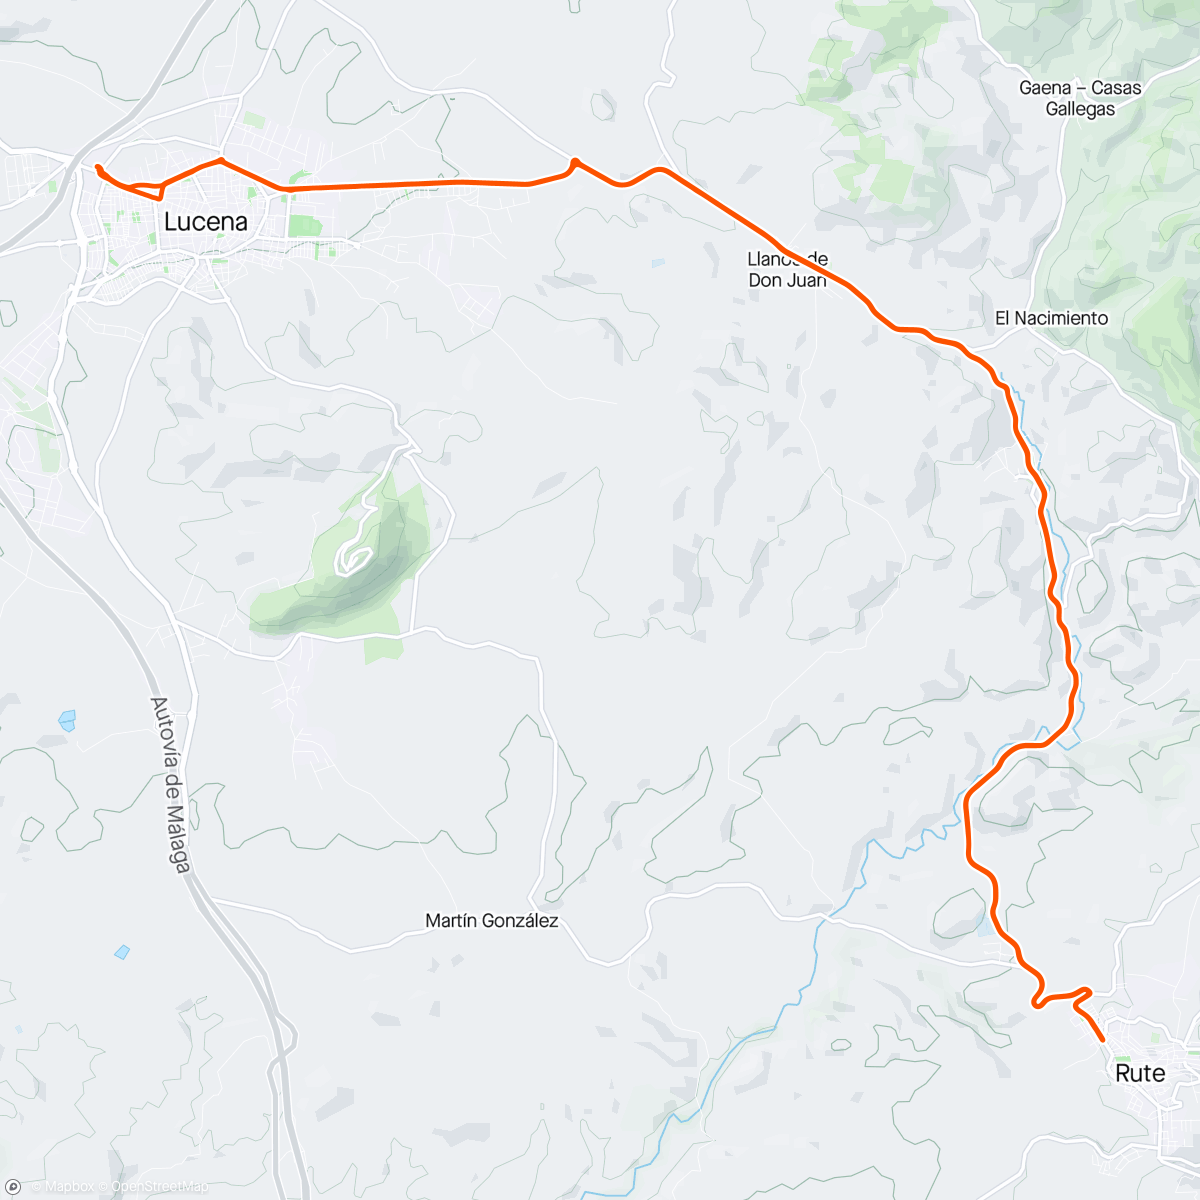 Map of the activity, Lucena-Rute ida y vuelta (carretera)